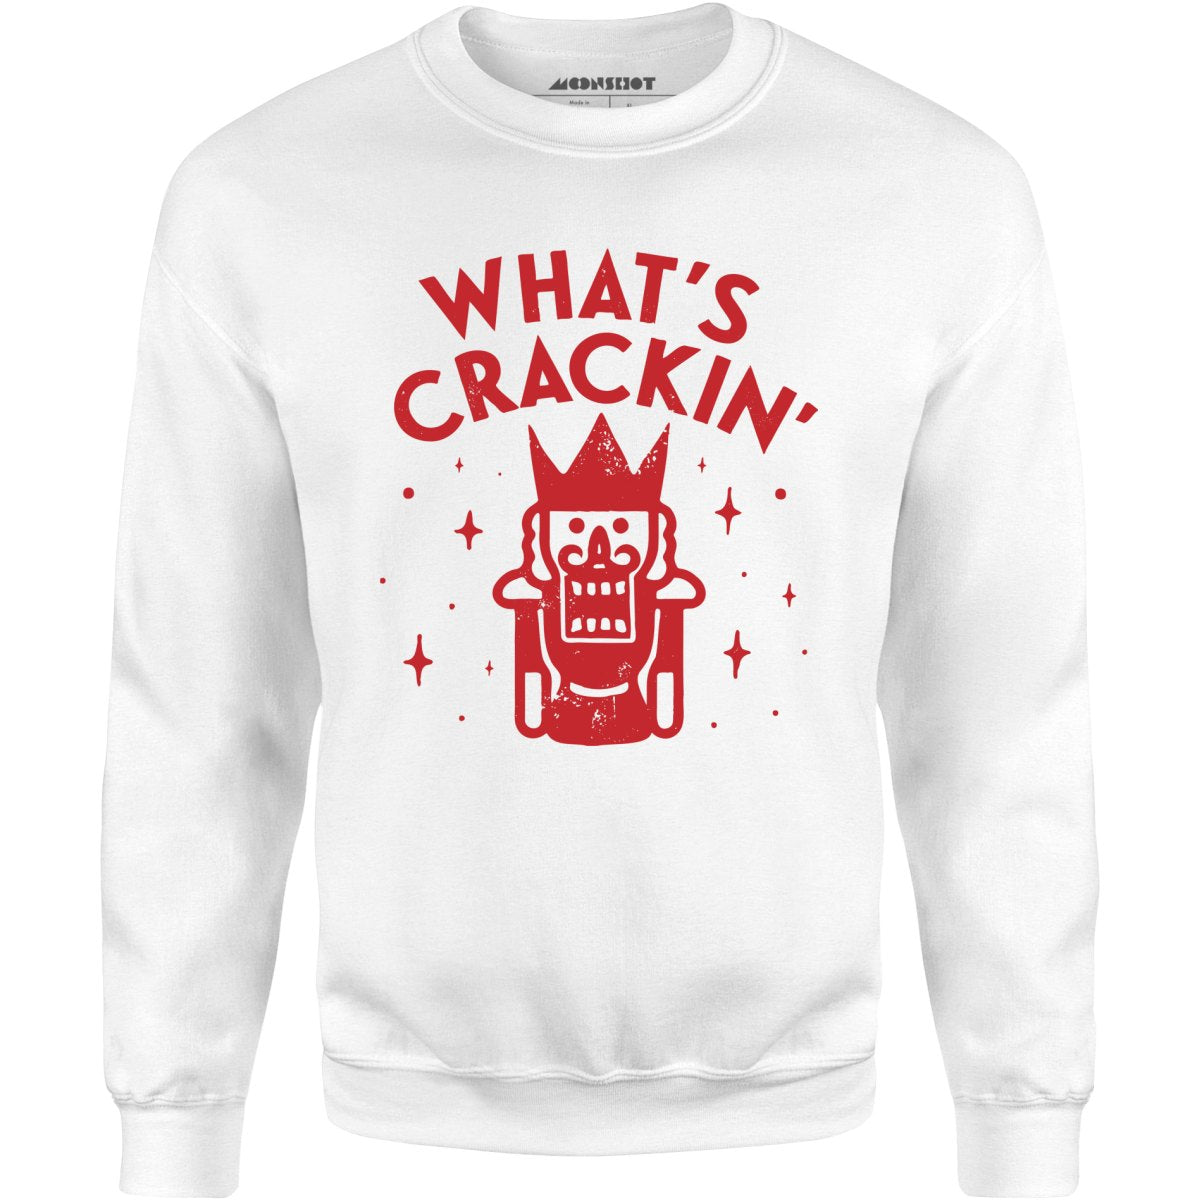 What's Crackin' - Unisex Sweatshirt